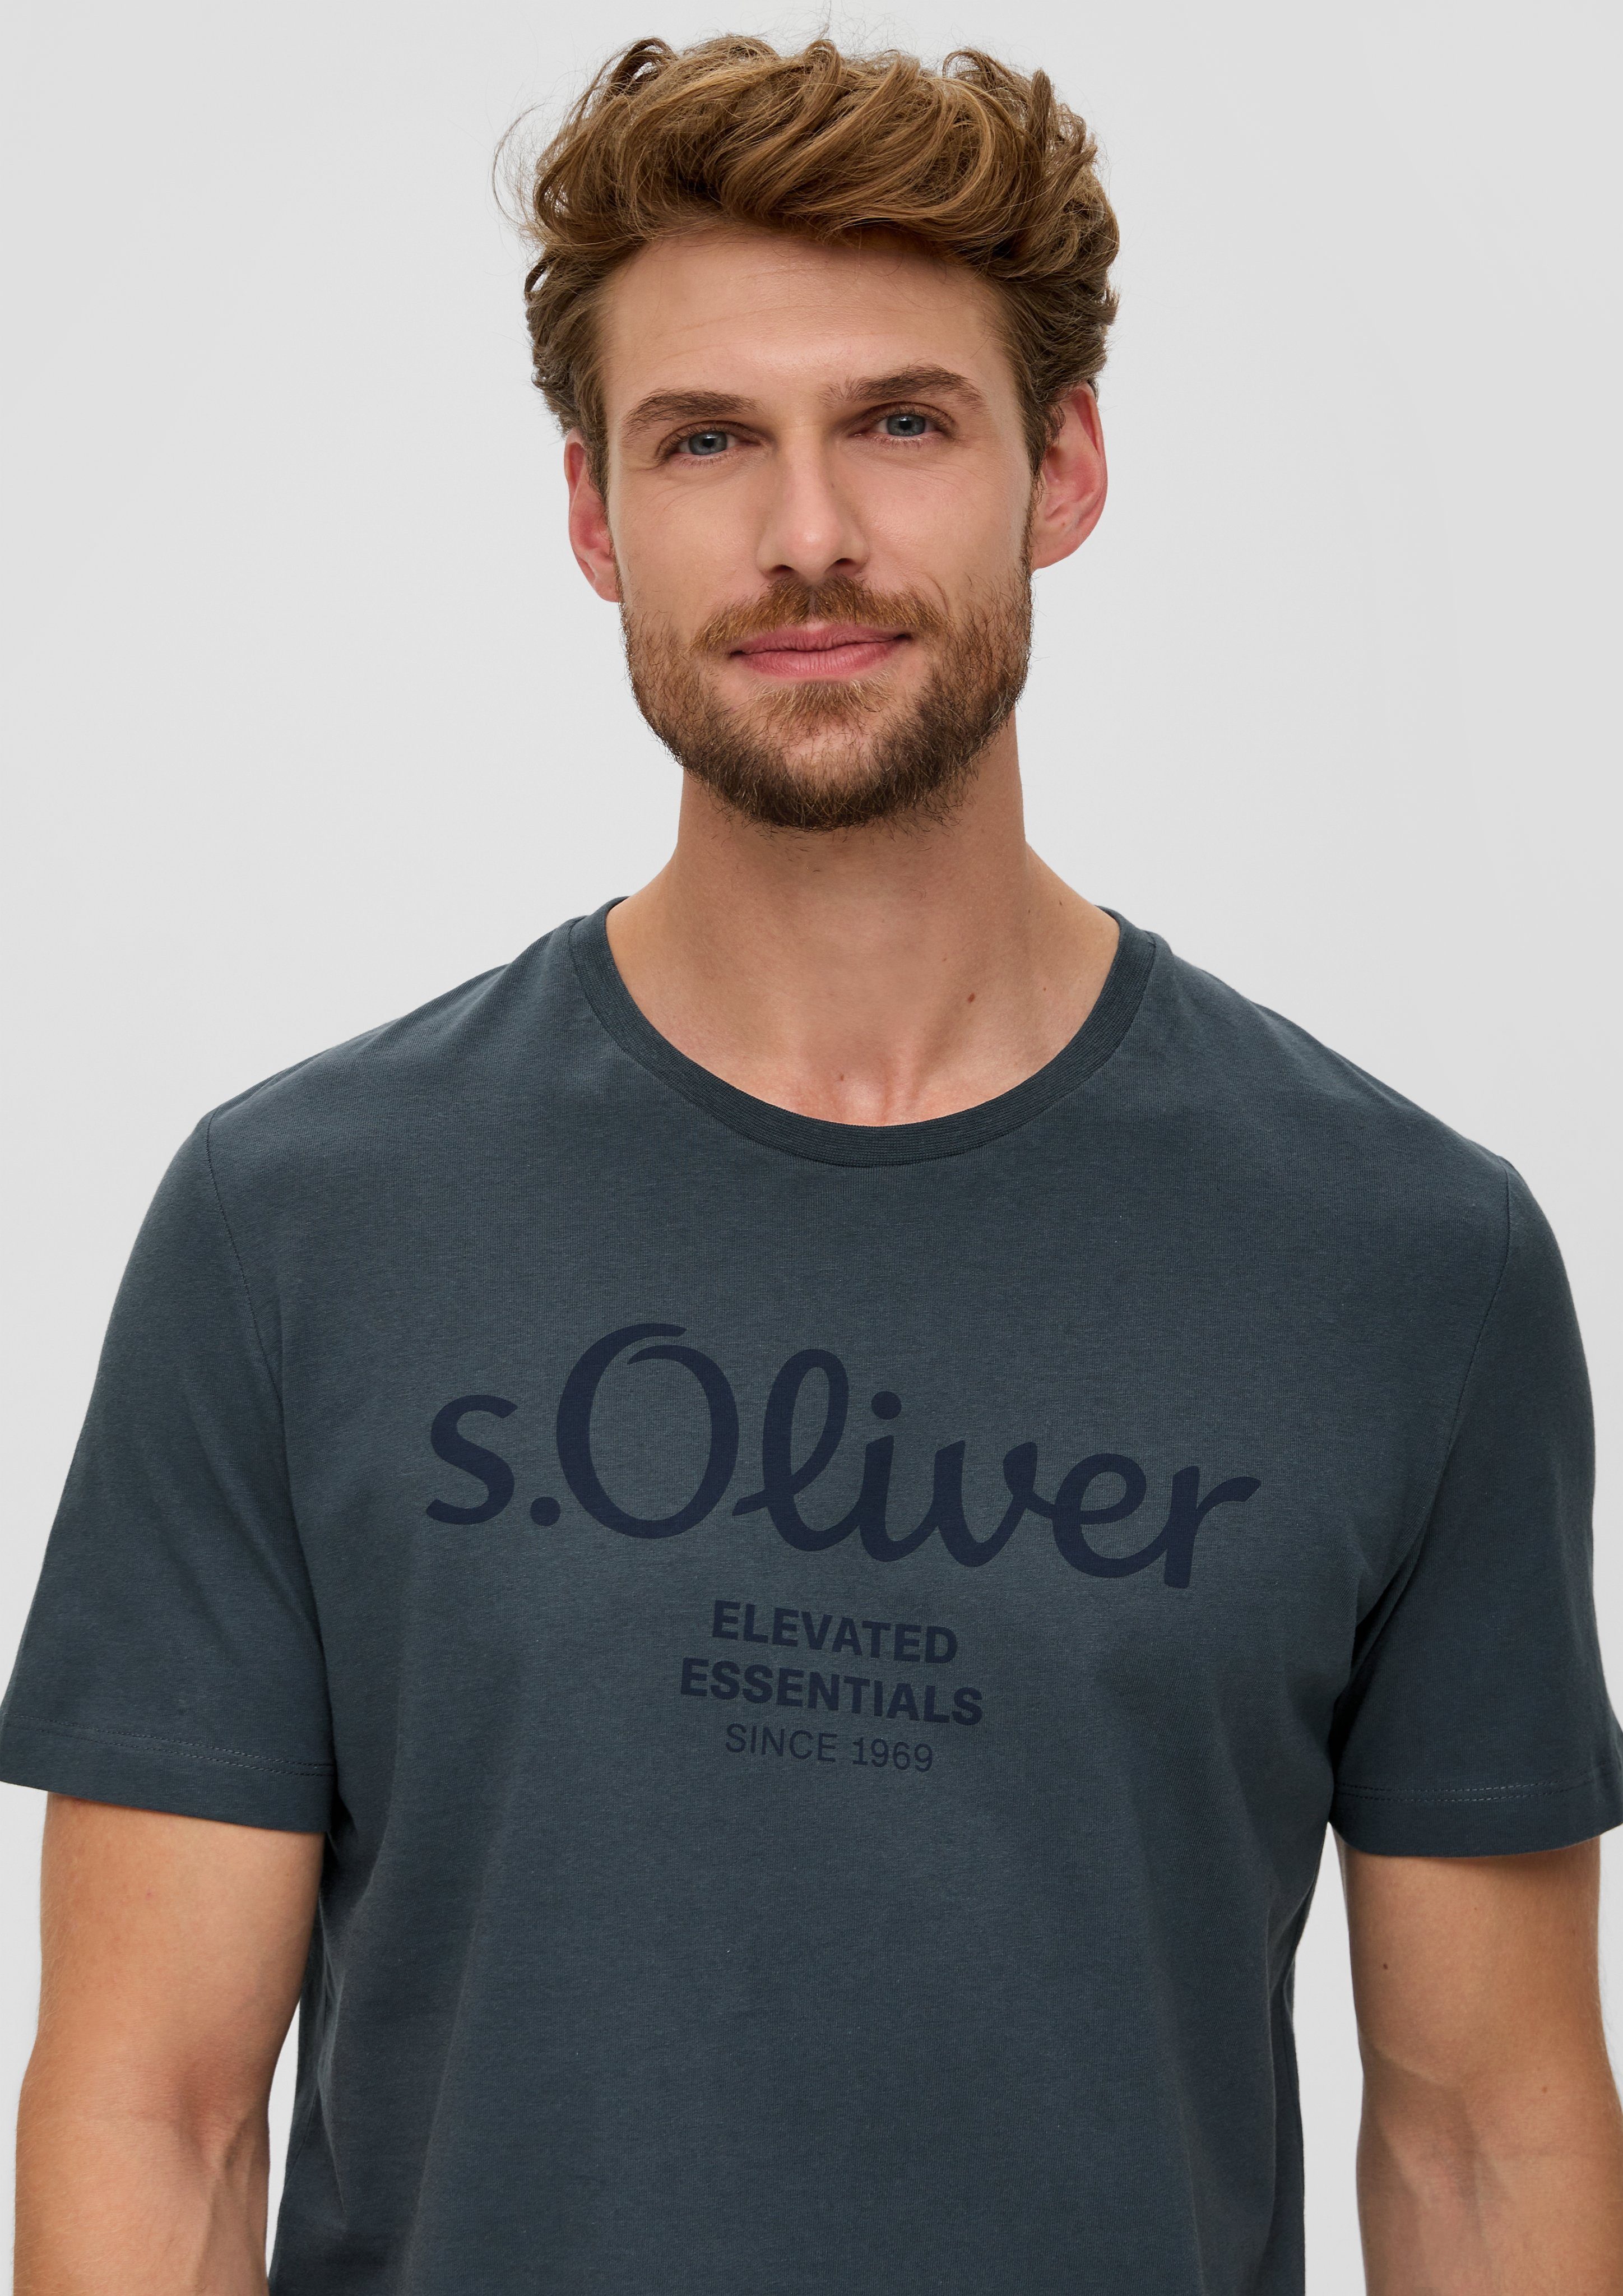 dark sportiven im T-Shirt grey Look s.Oliver